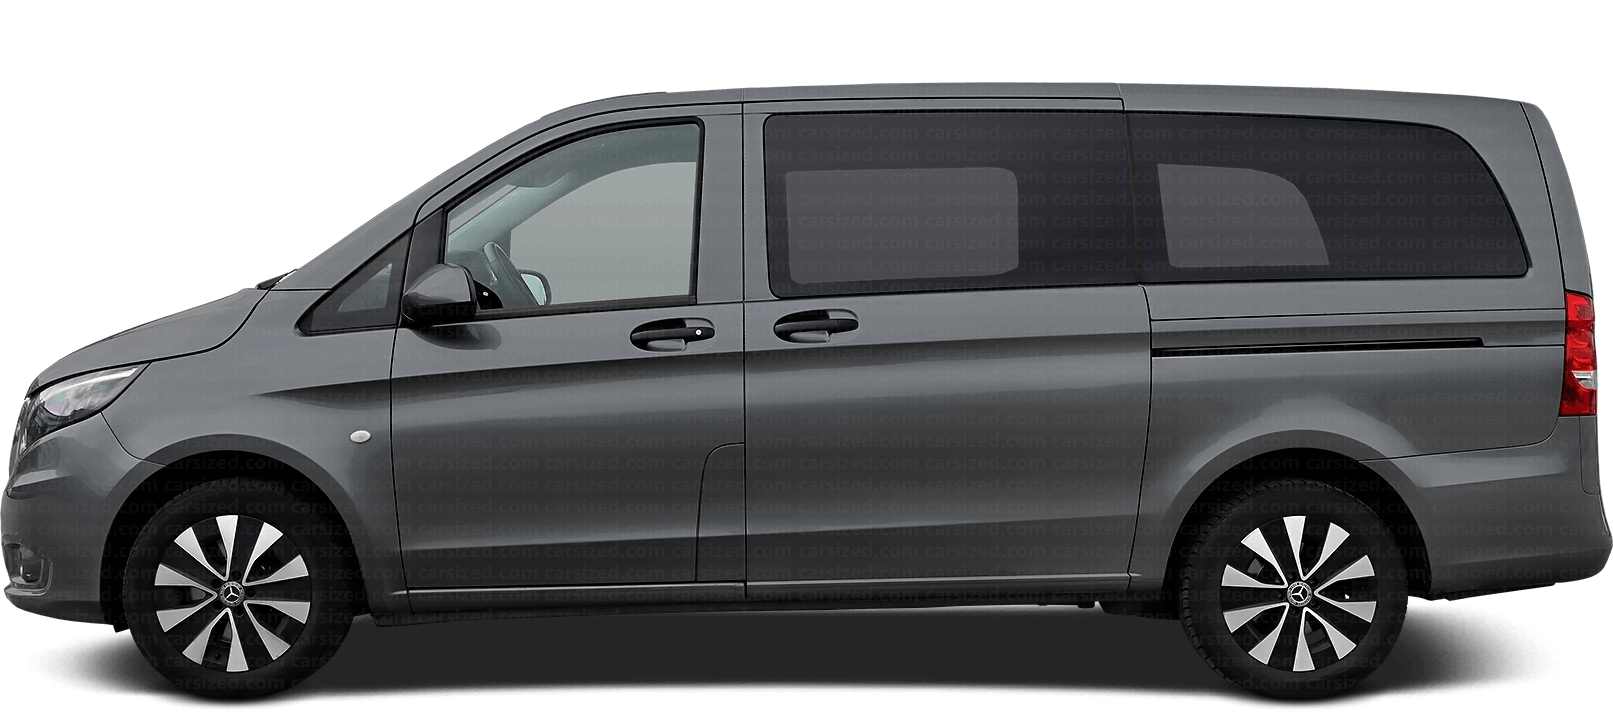 Mercedes-Benz Vito exterior - Side Profile